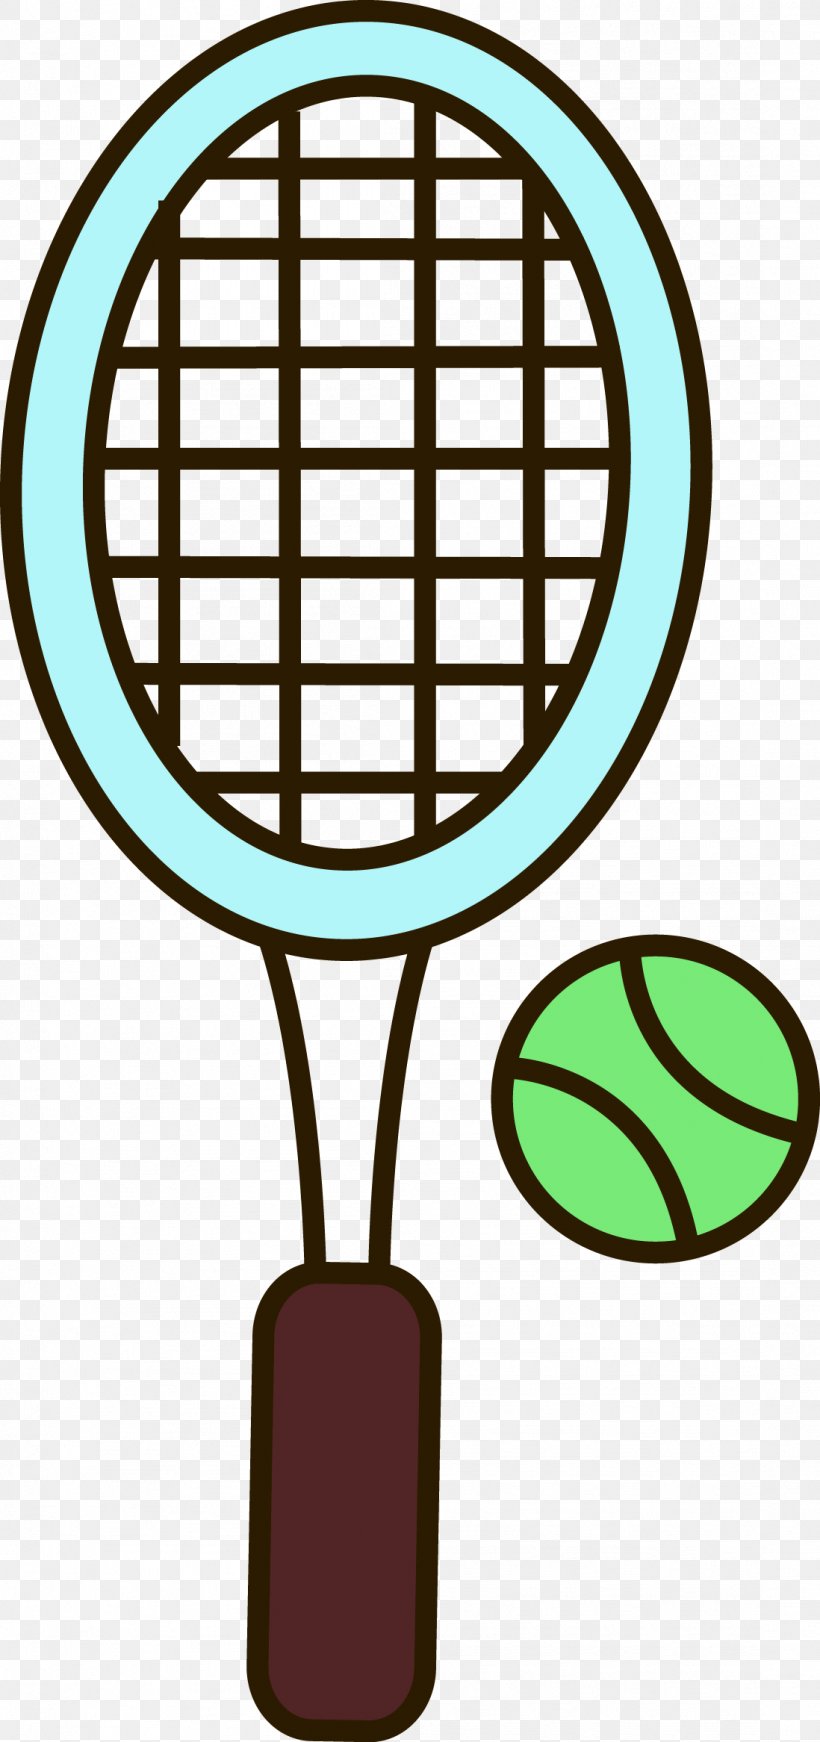 Tennis Rakieta Tenisowa Racket Illustration Image, PNG, 1098x2333px, Tennis, Area, Association Of Tennis Professionals, Ball, Forehand Download Free